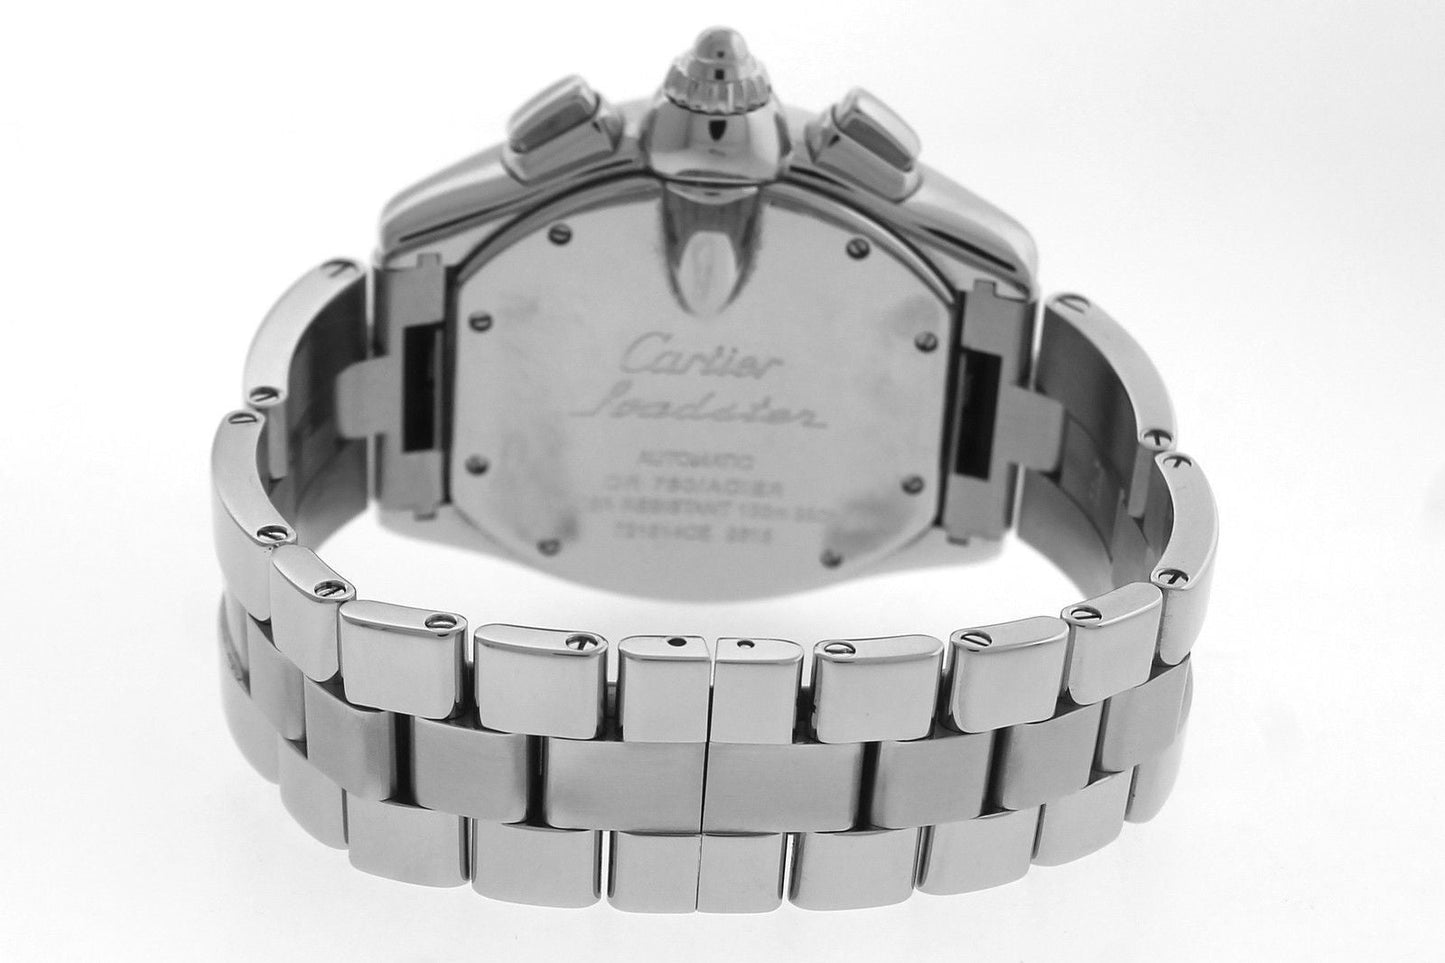 MINT Men's Cartier Roadster XL Stainless Black Chronograph Watch 2618 W62019X6